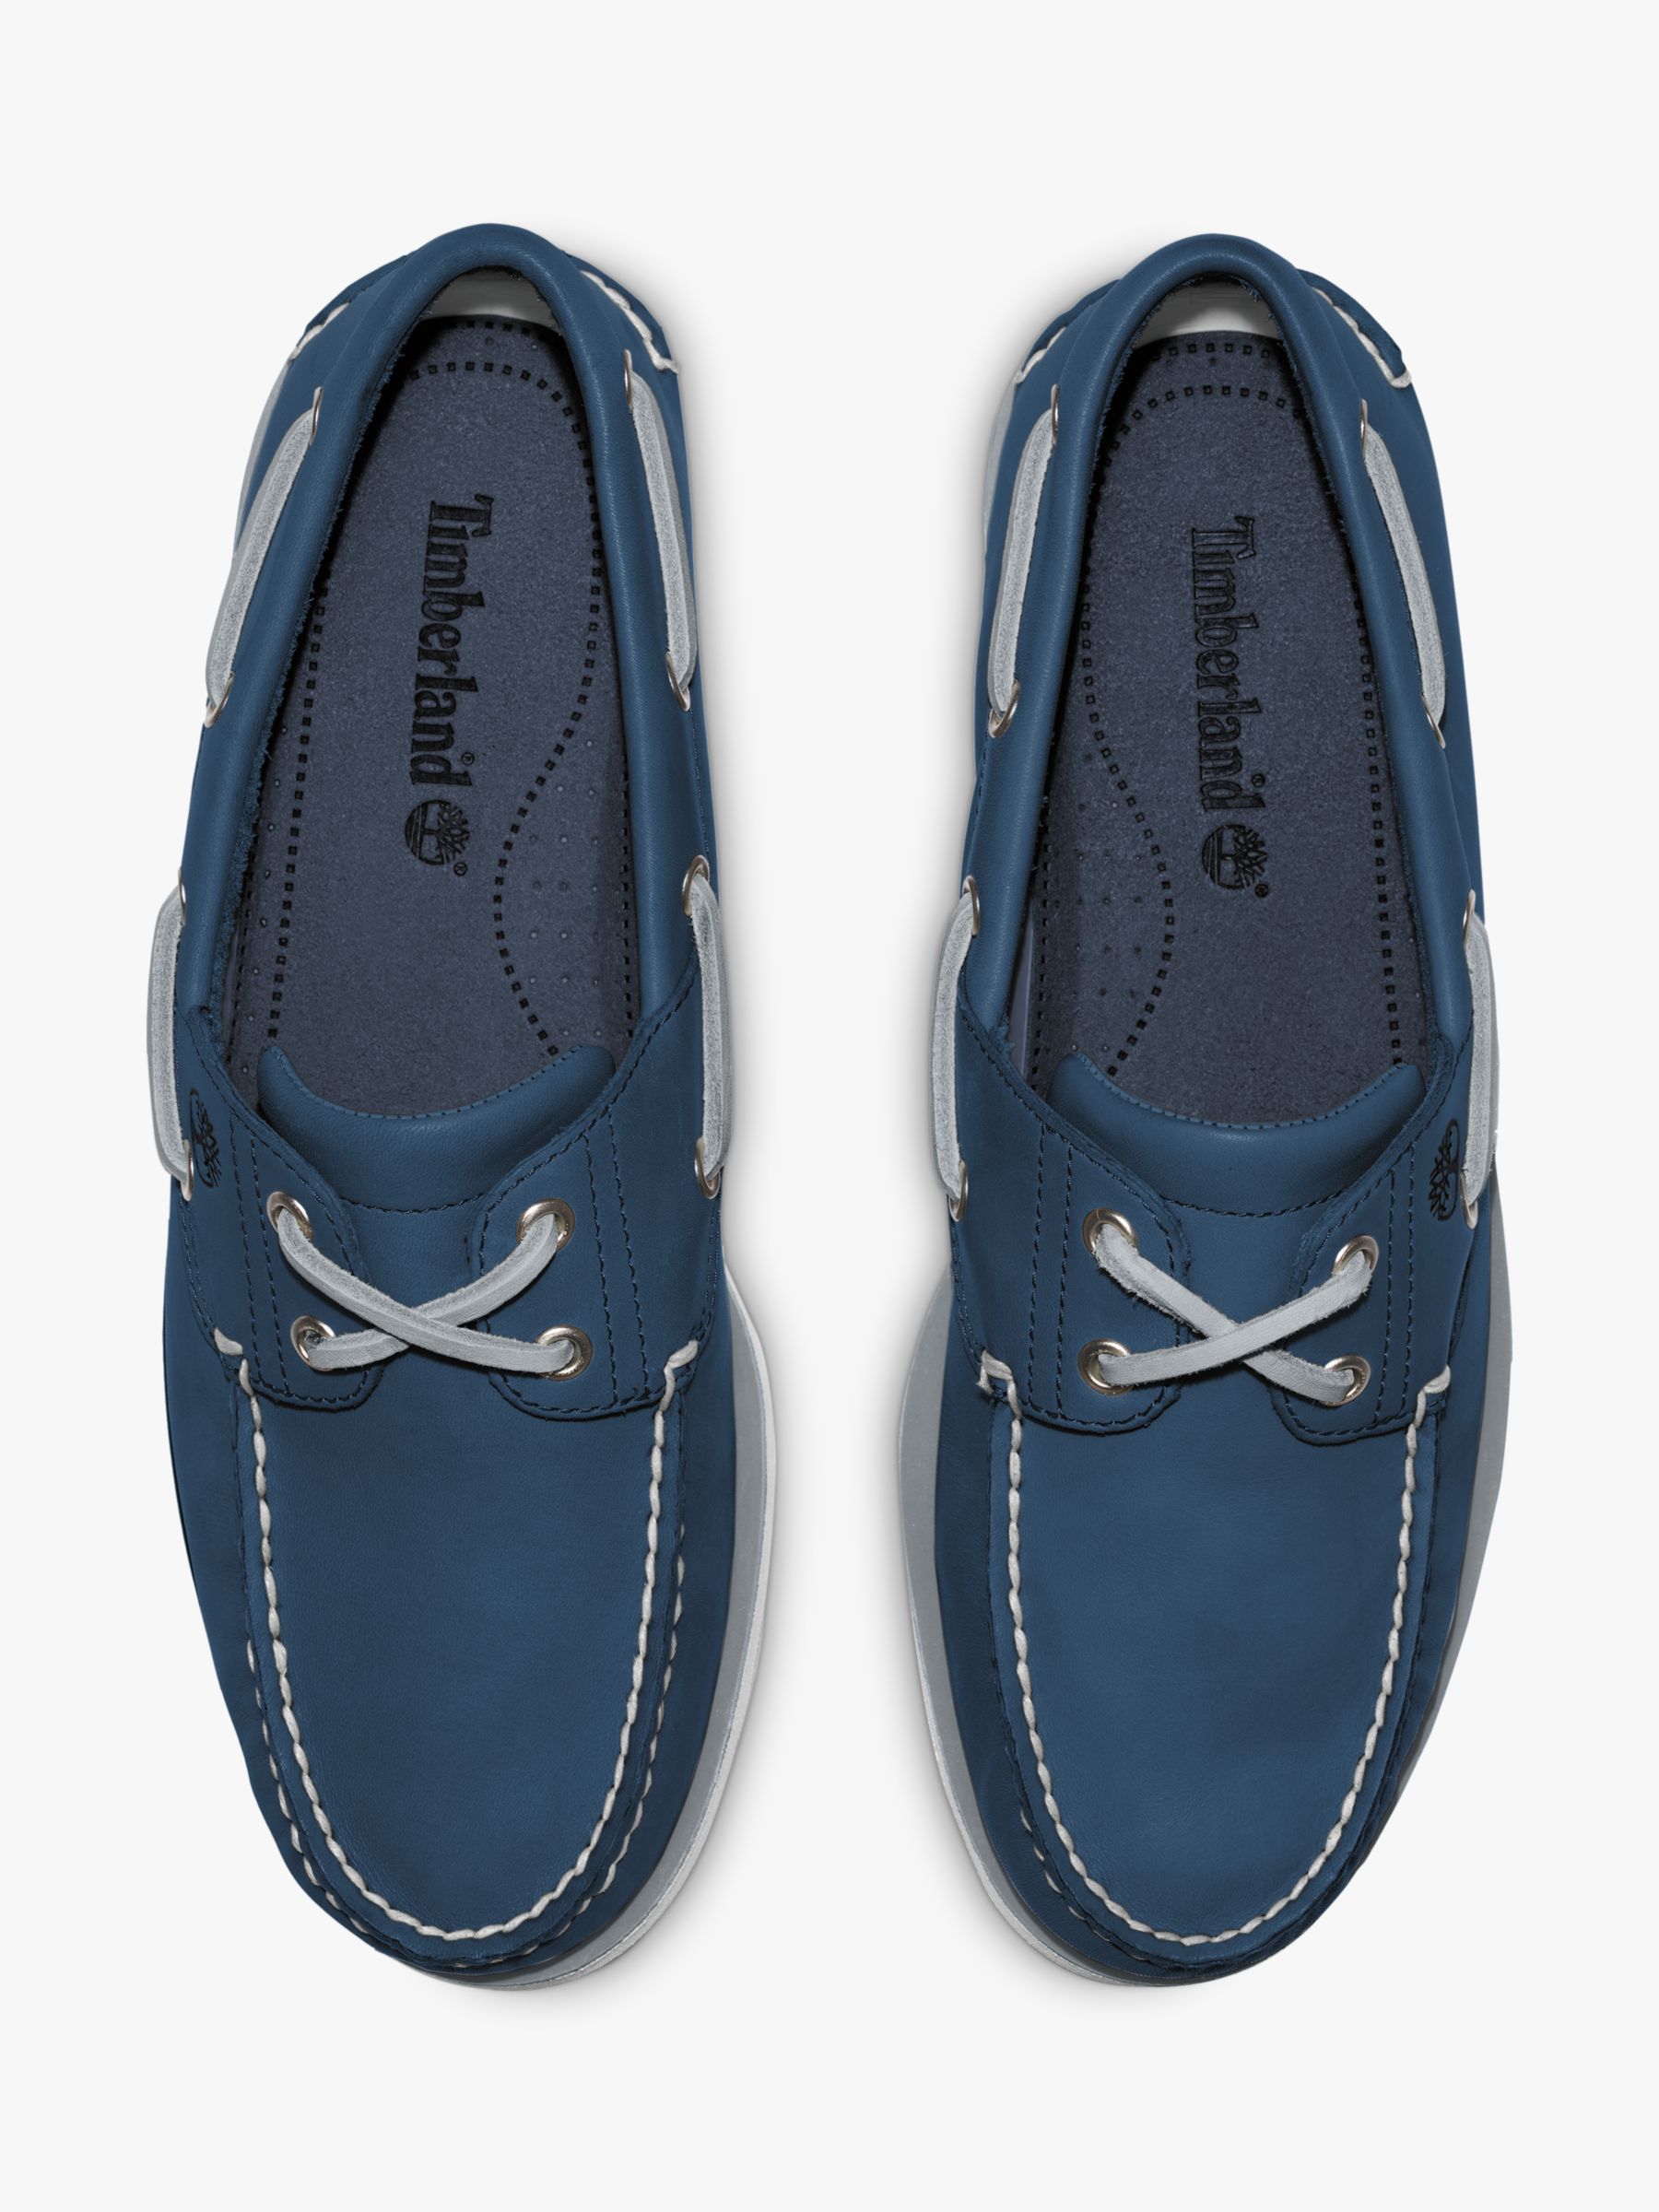 Rudyard Kipling Deshabilitar cuero Timberland Classic 2 Eye Boat Shoes, Blue at John Lewis & Partners